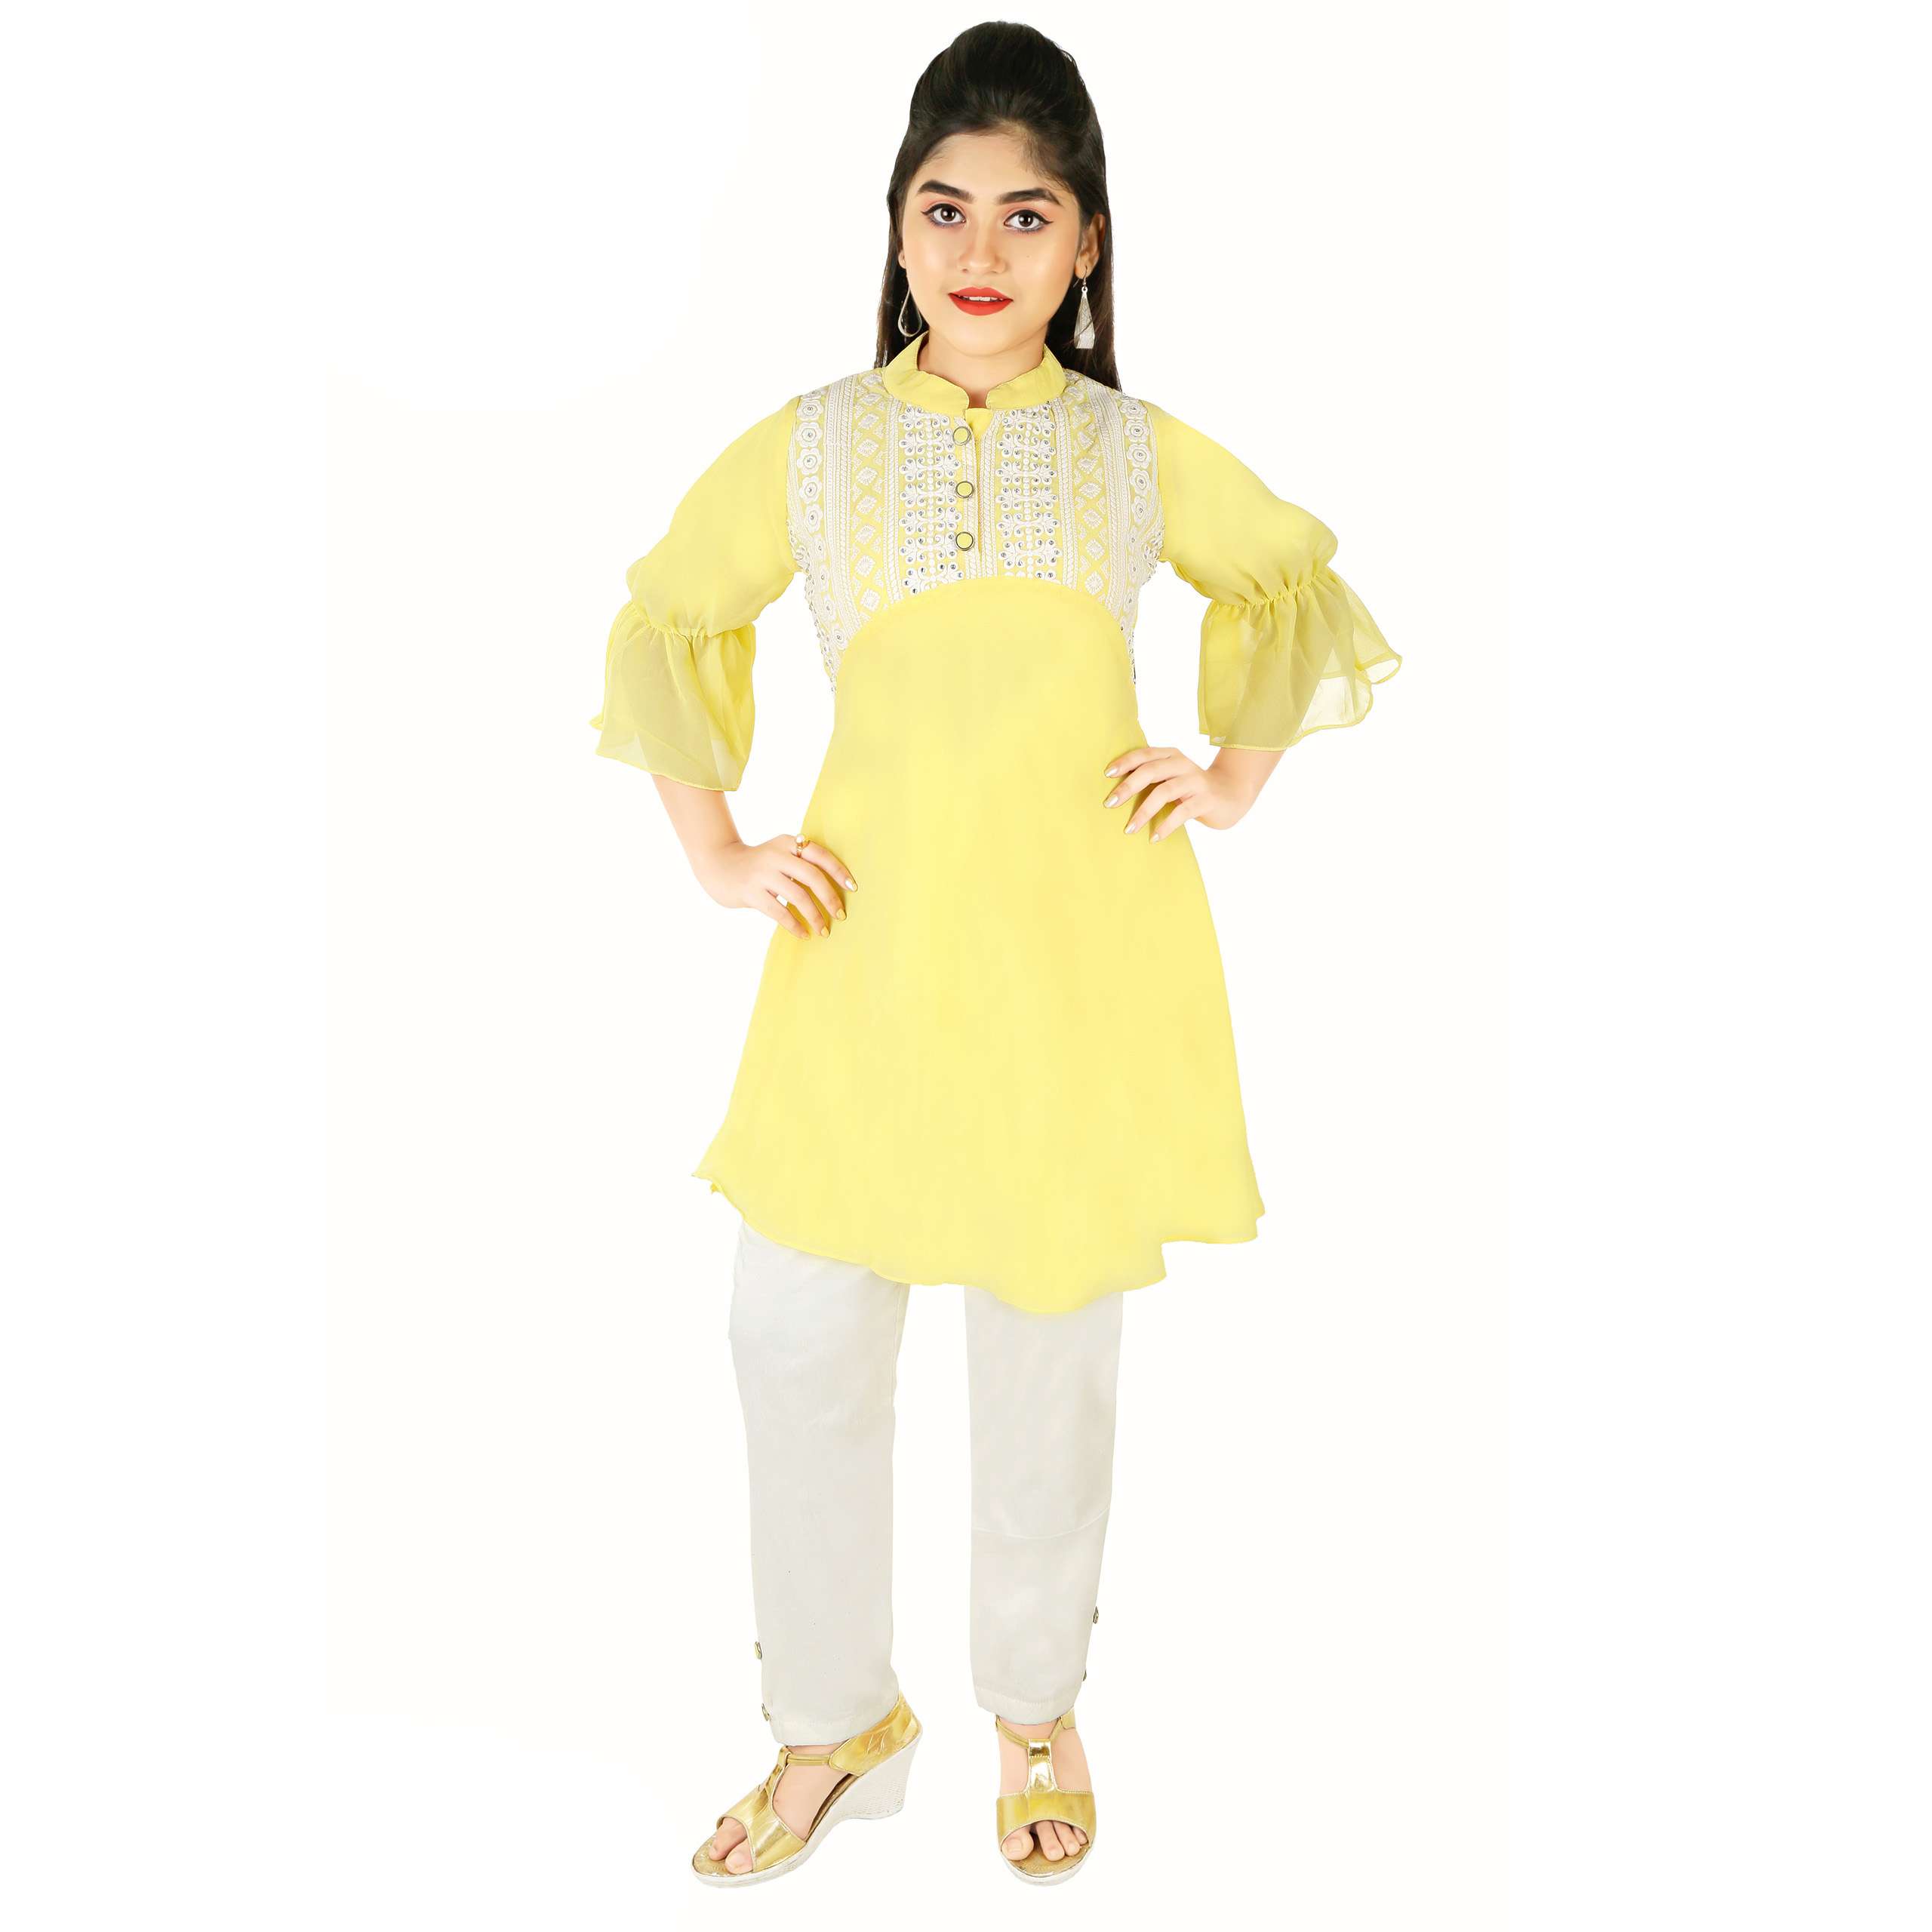 Balaji Emporium Presents Kids Wear Special Designer Indian Party Wear Salwar Kameez Suit Girlish Dress Collection At Best Price 9003